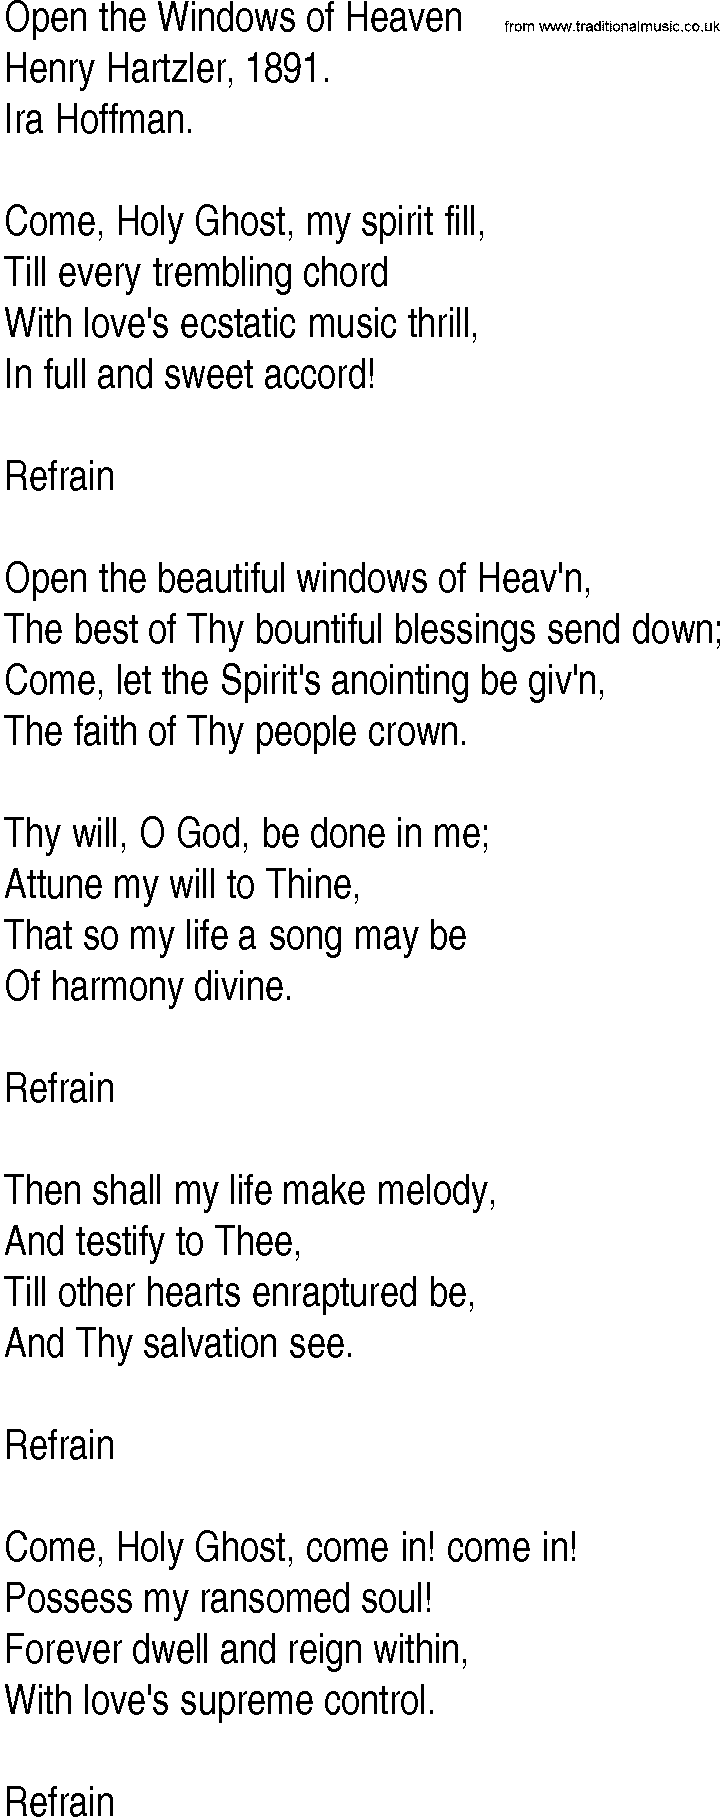 Hymn and Gospel Song: Open the Windows of Heaven by Henry Hartzler lyrics